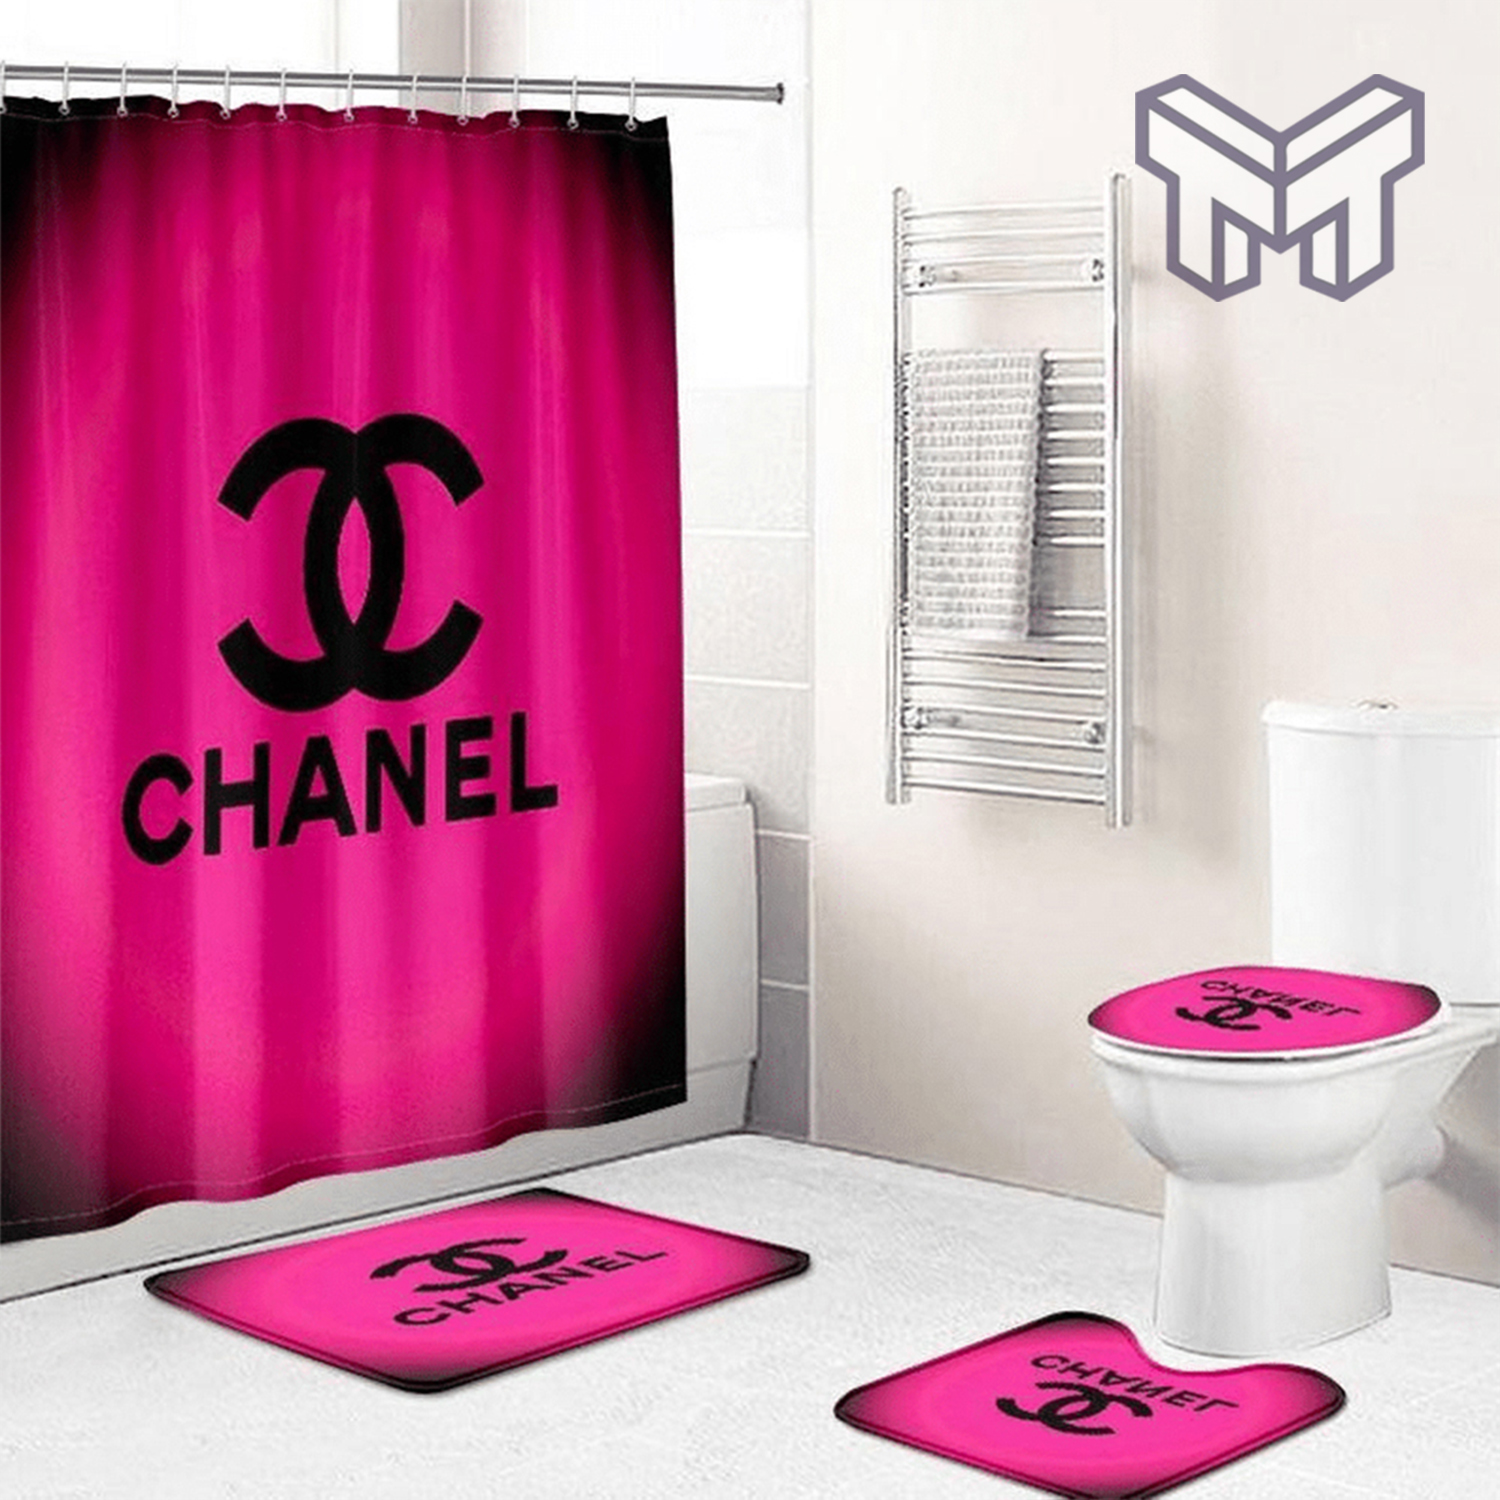 chanel shower curtains for bathroom set